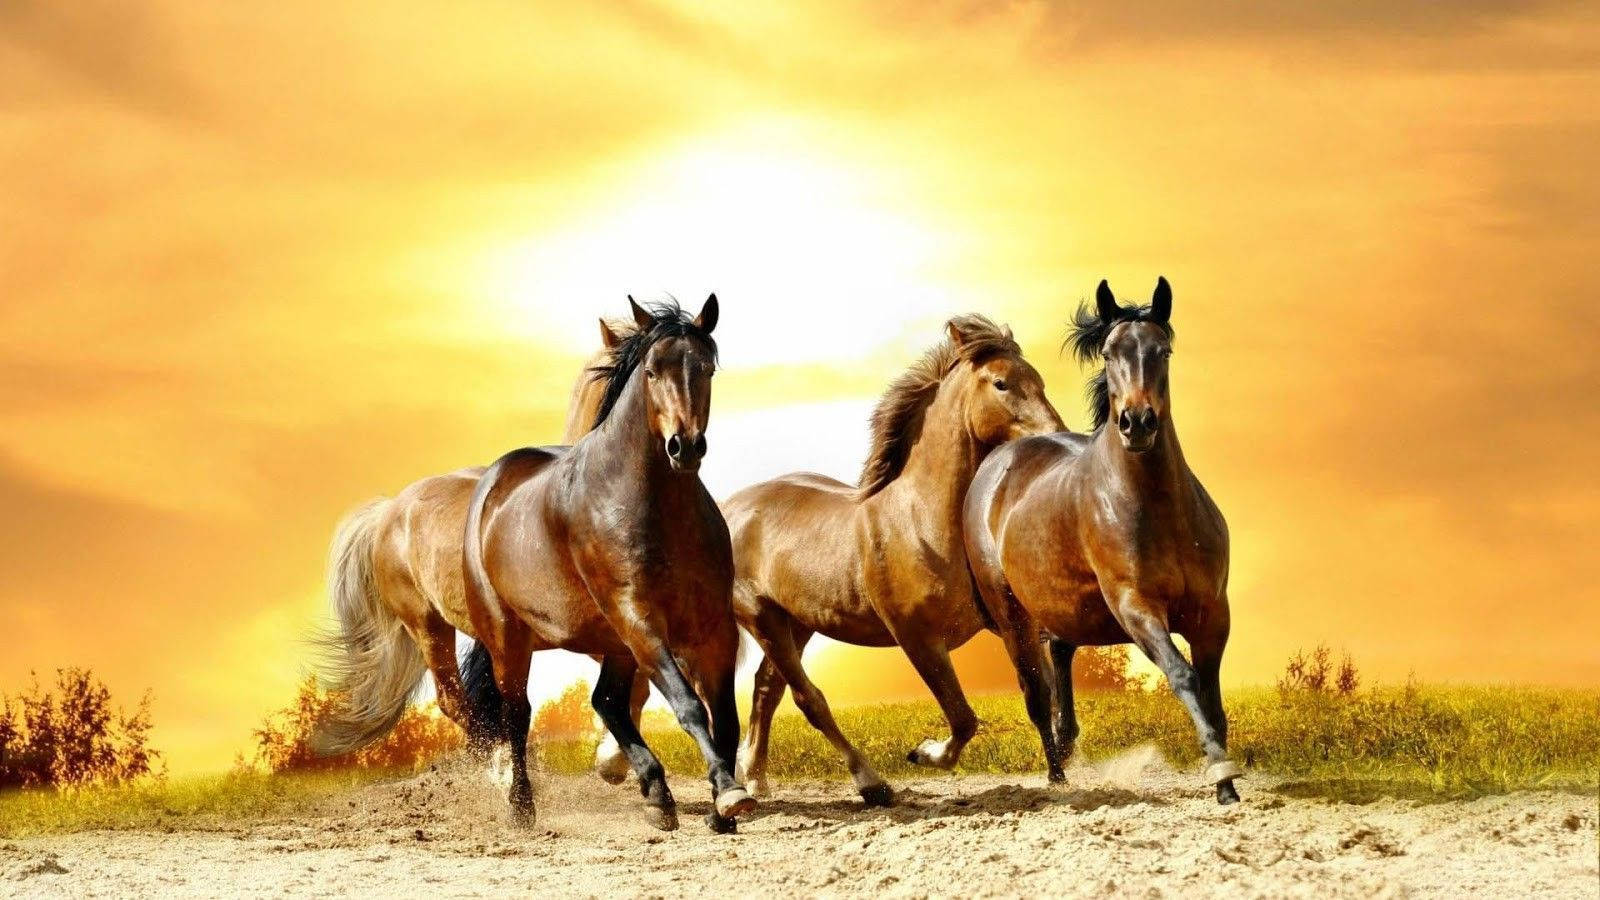 Cute Horses On A Sandy Field